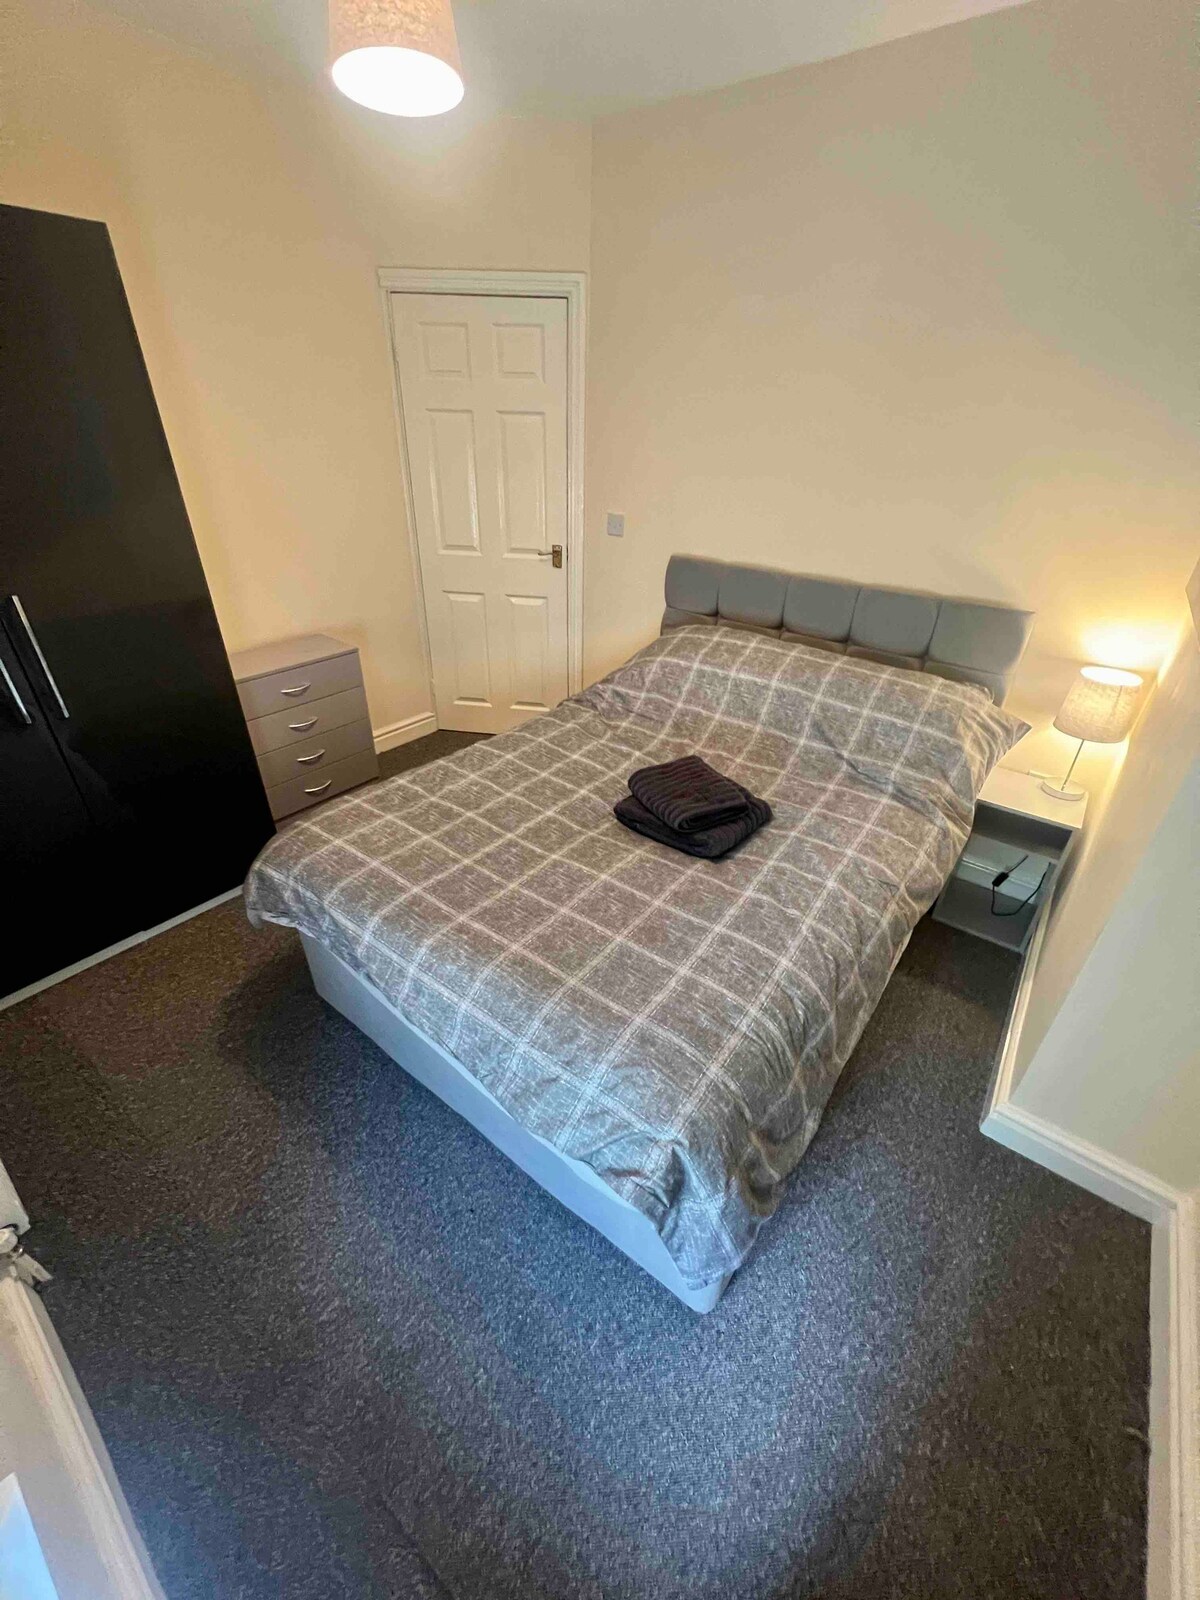 3 Bedroom Home, Llanhilleth, South Wales